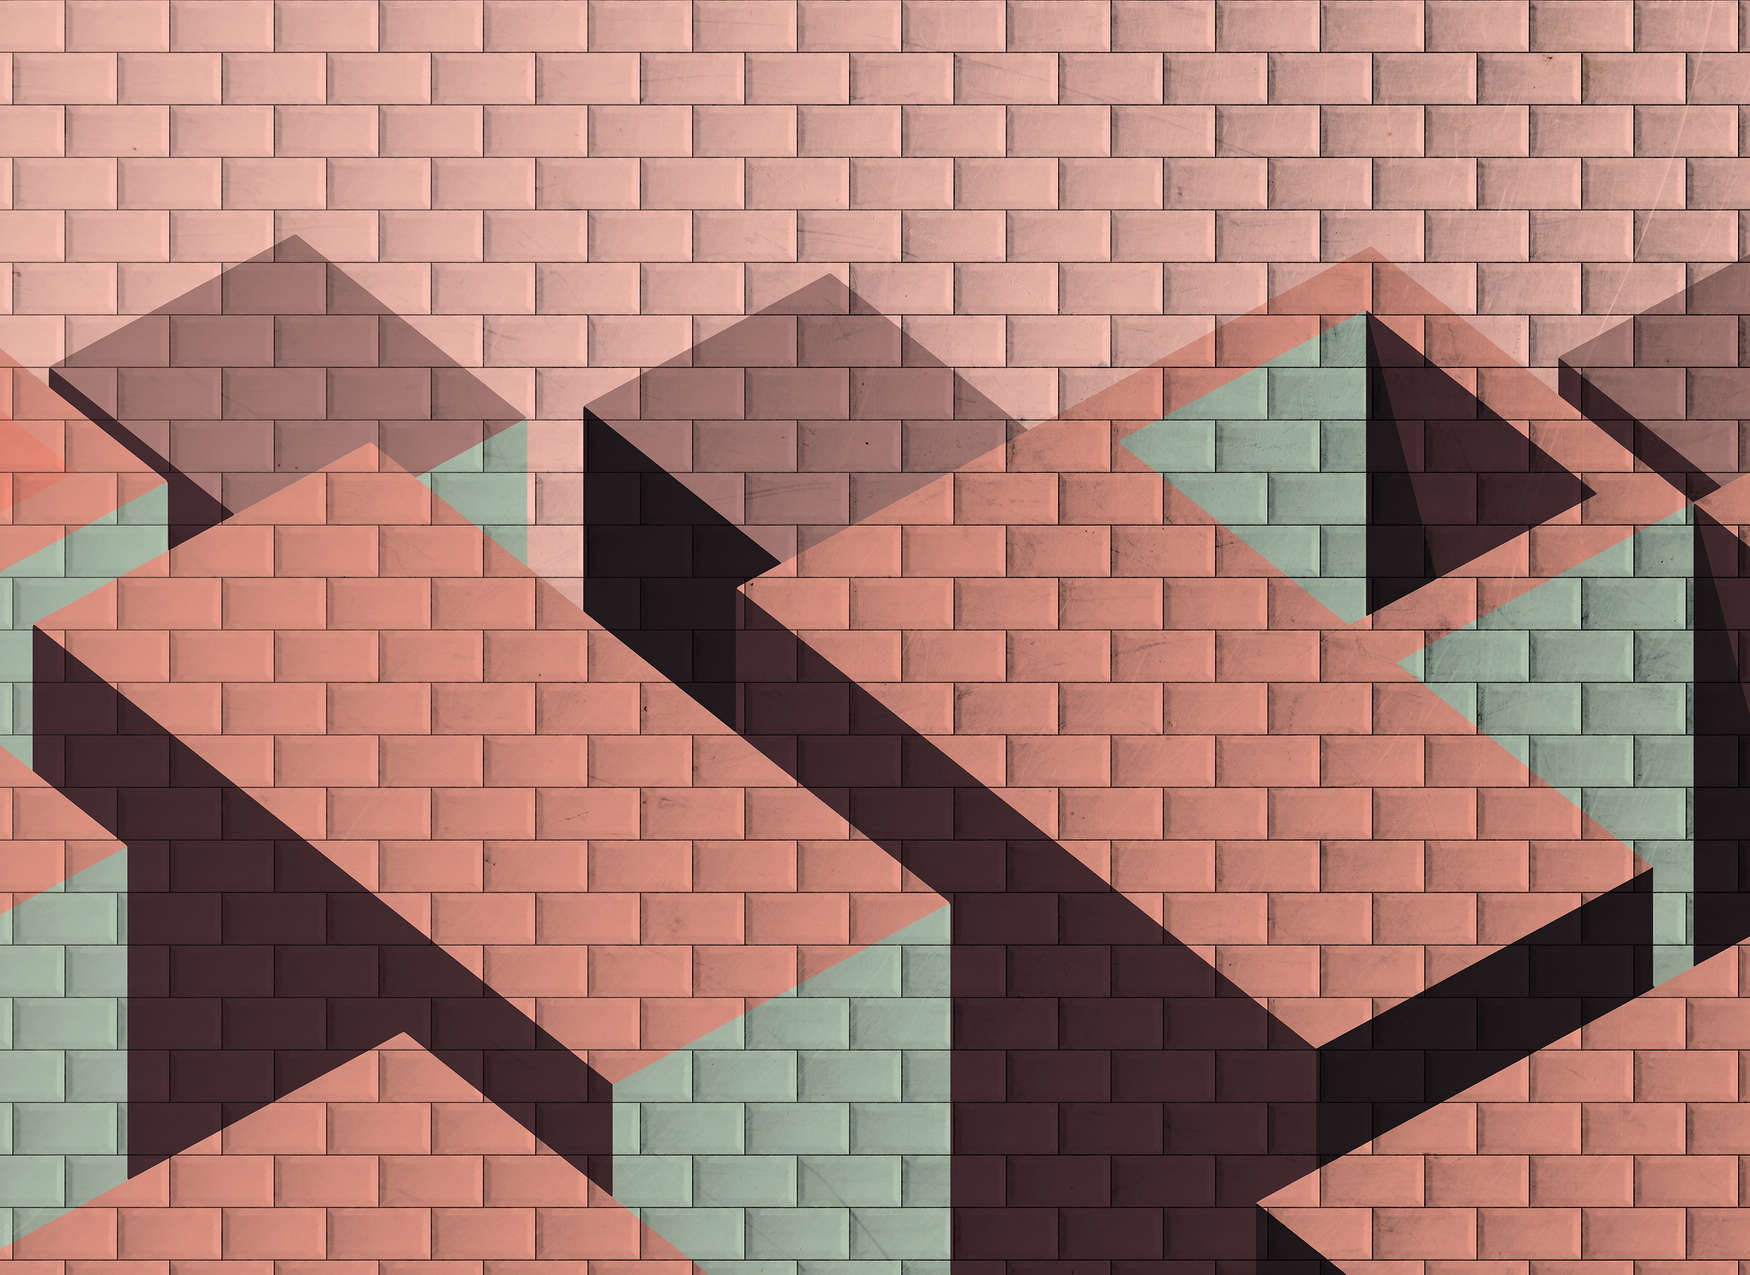             Fototapete Ziegelsteinmauer mit Block-Bemalung – Rot, Pink, Grün
        